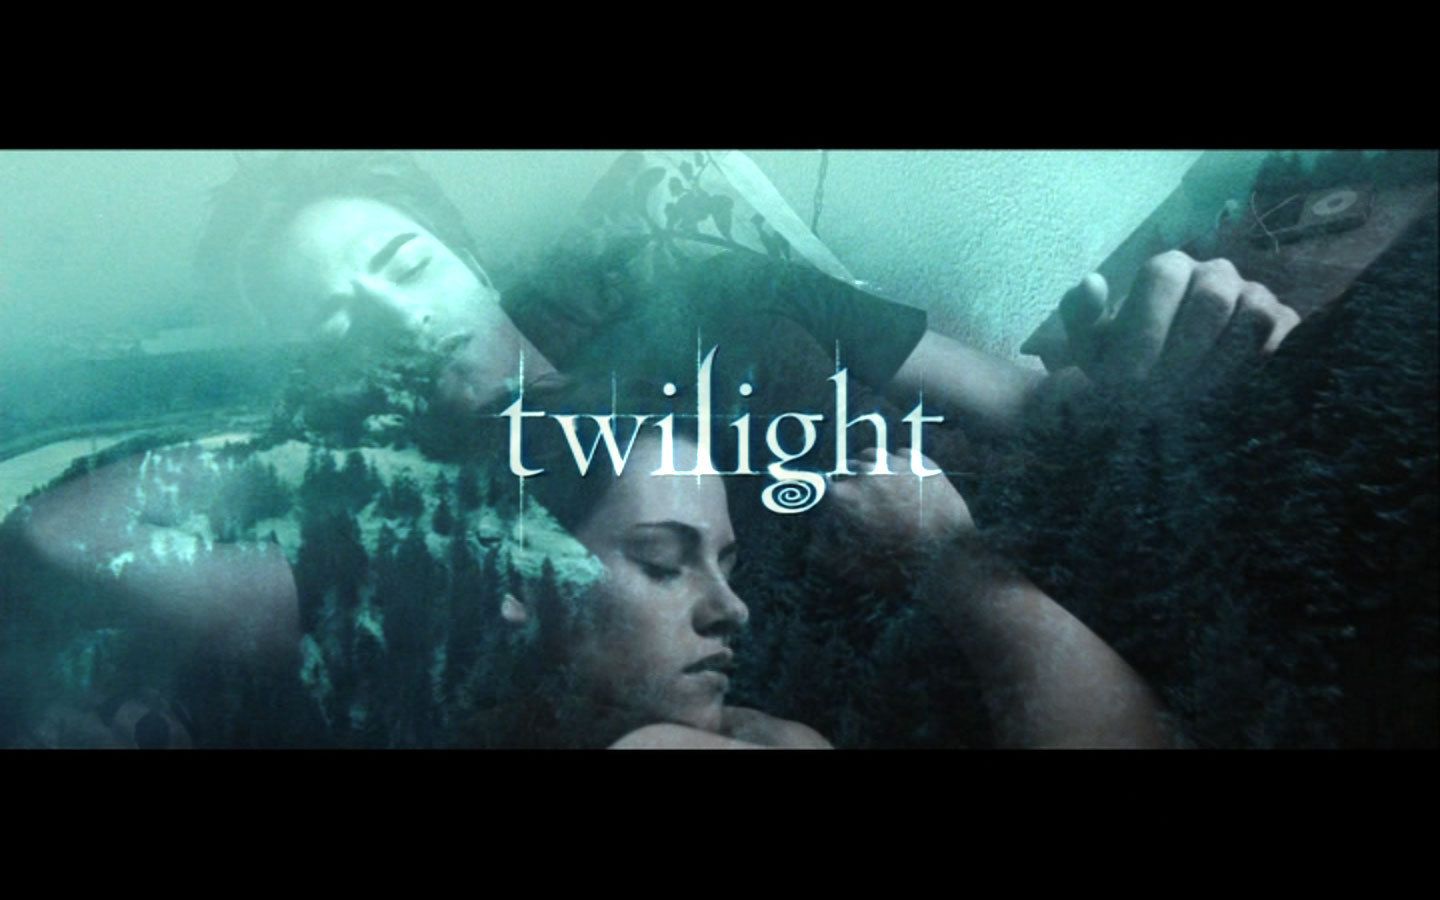 Twilight - Twilight Movie Wallpaper (15538643) - Fanpop